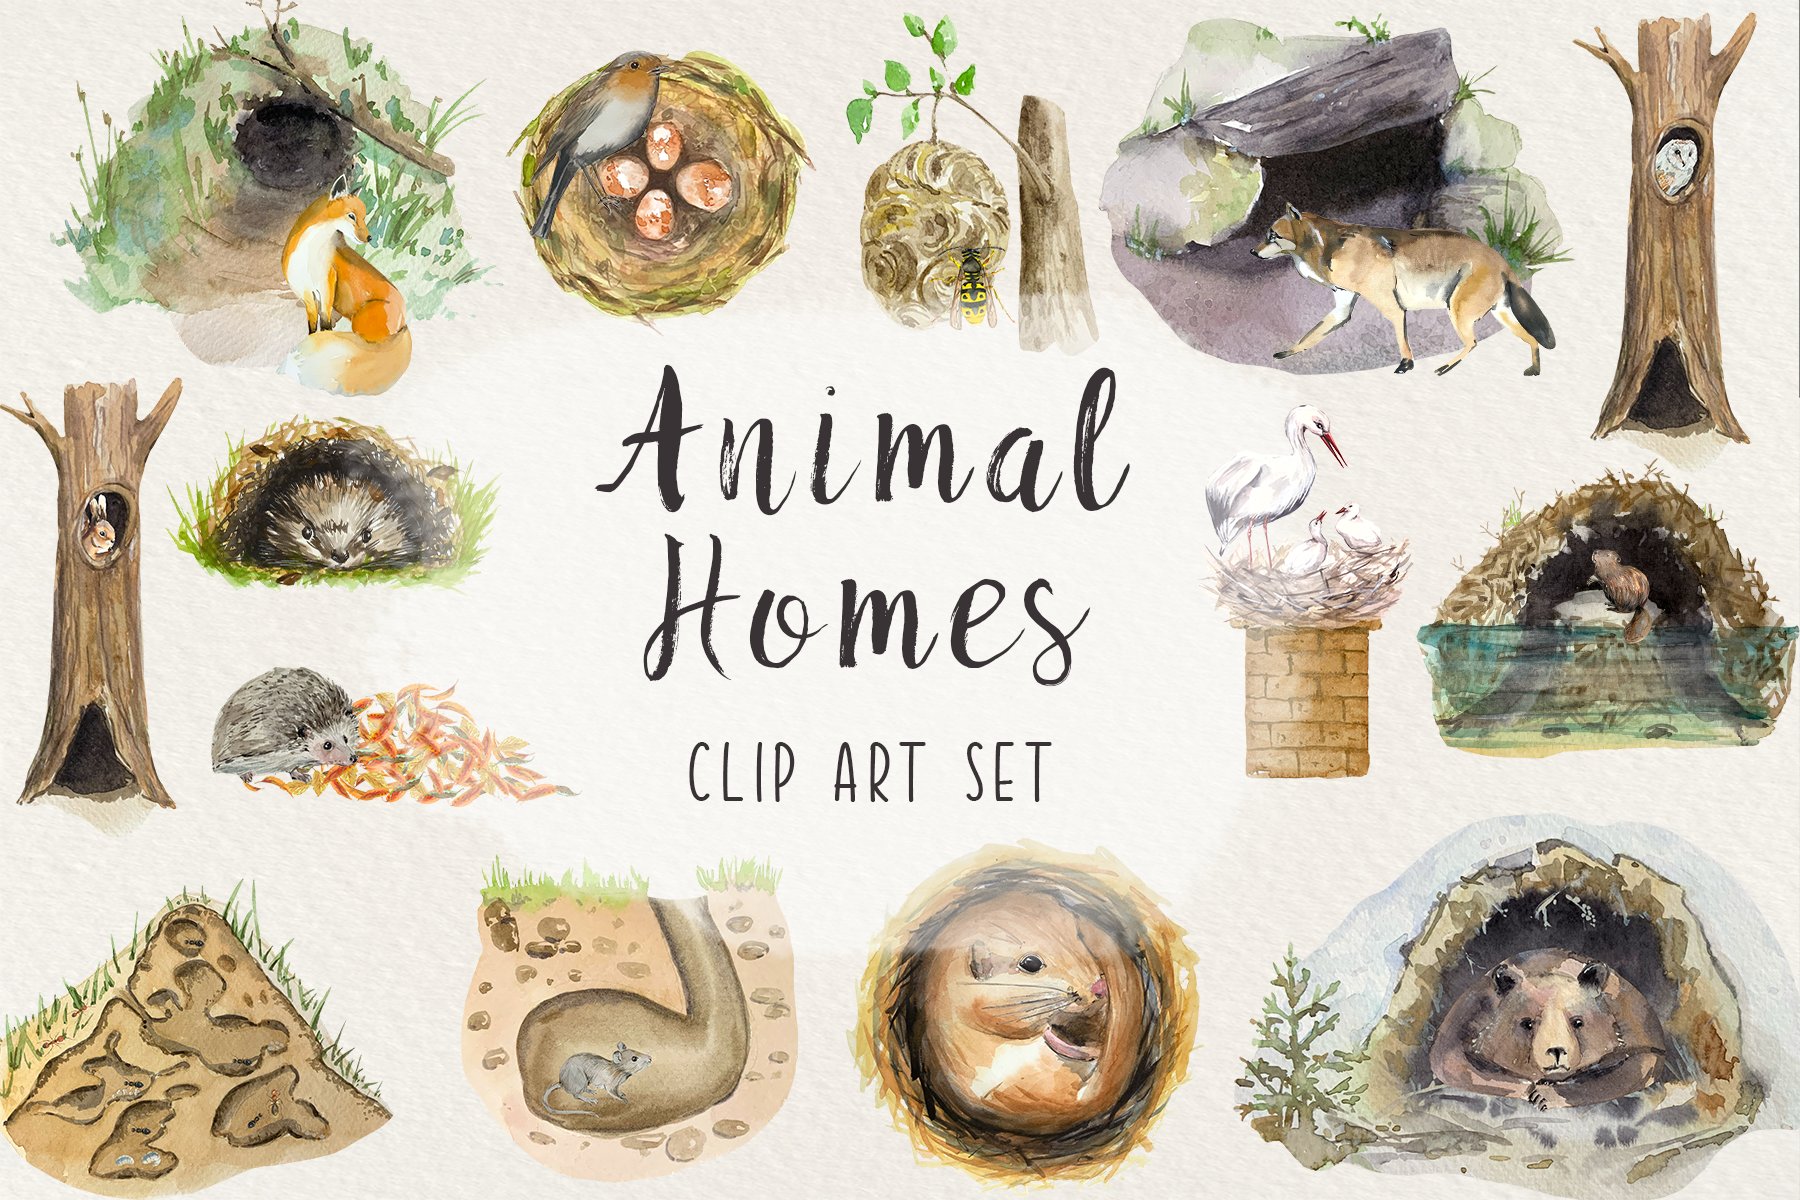 Animal Homes - Watercolor Clip Arts cover image.